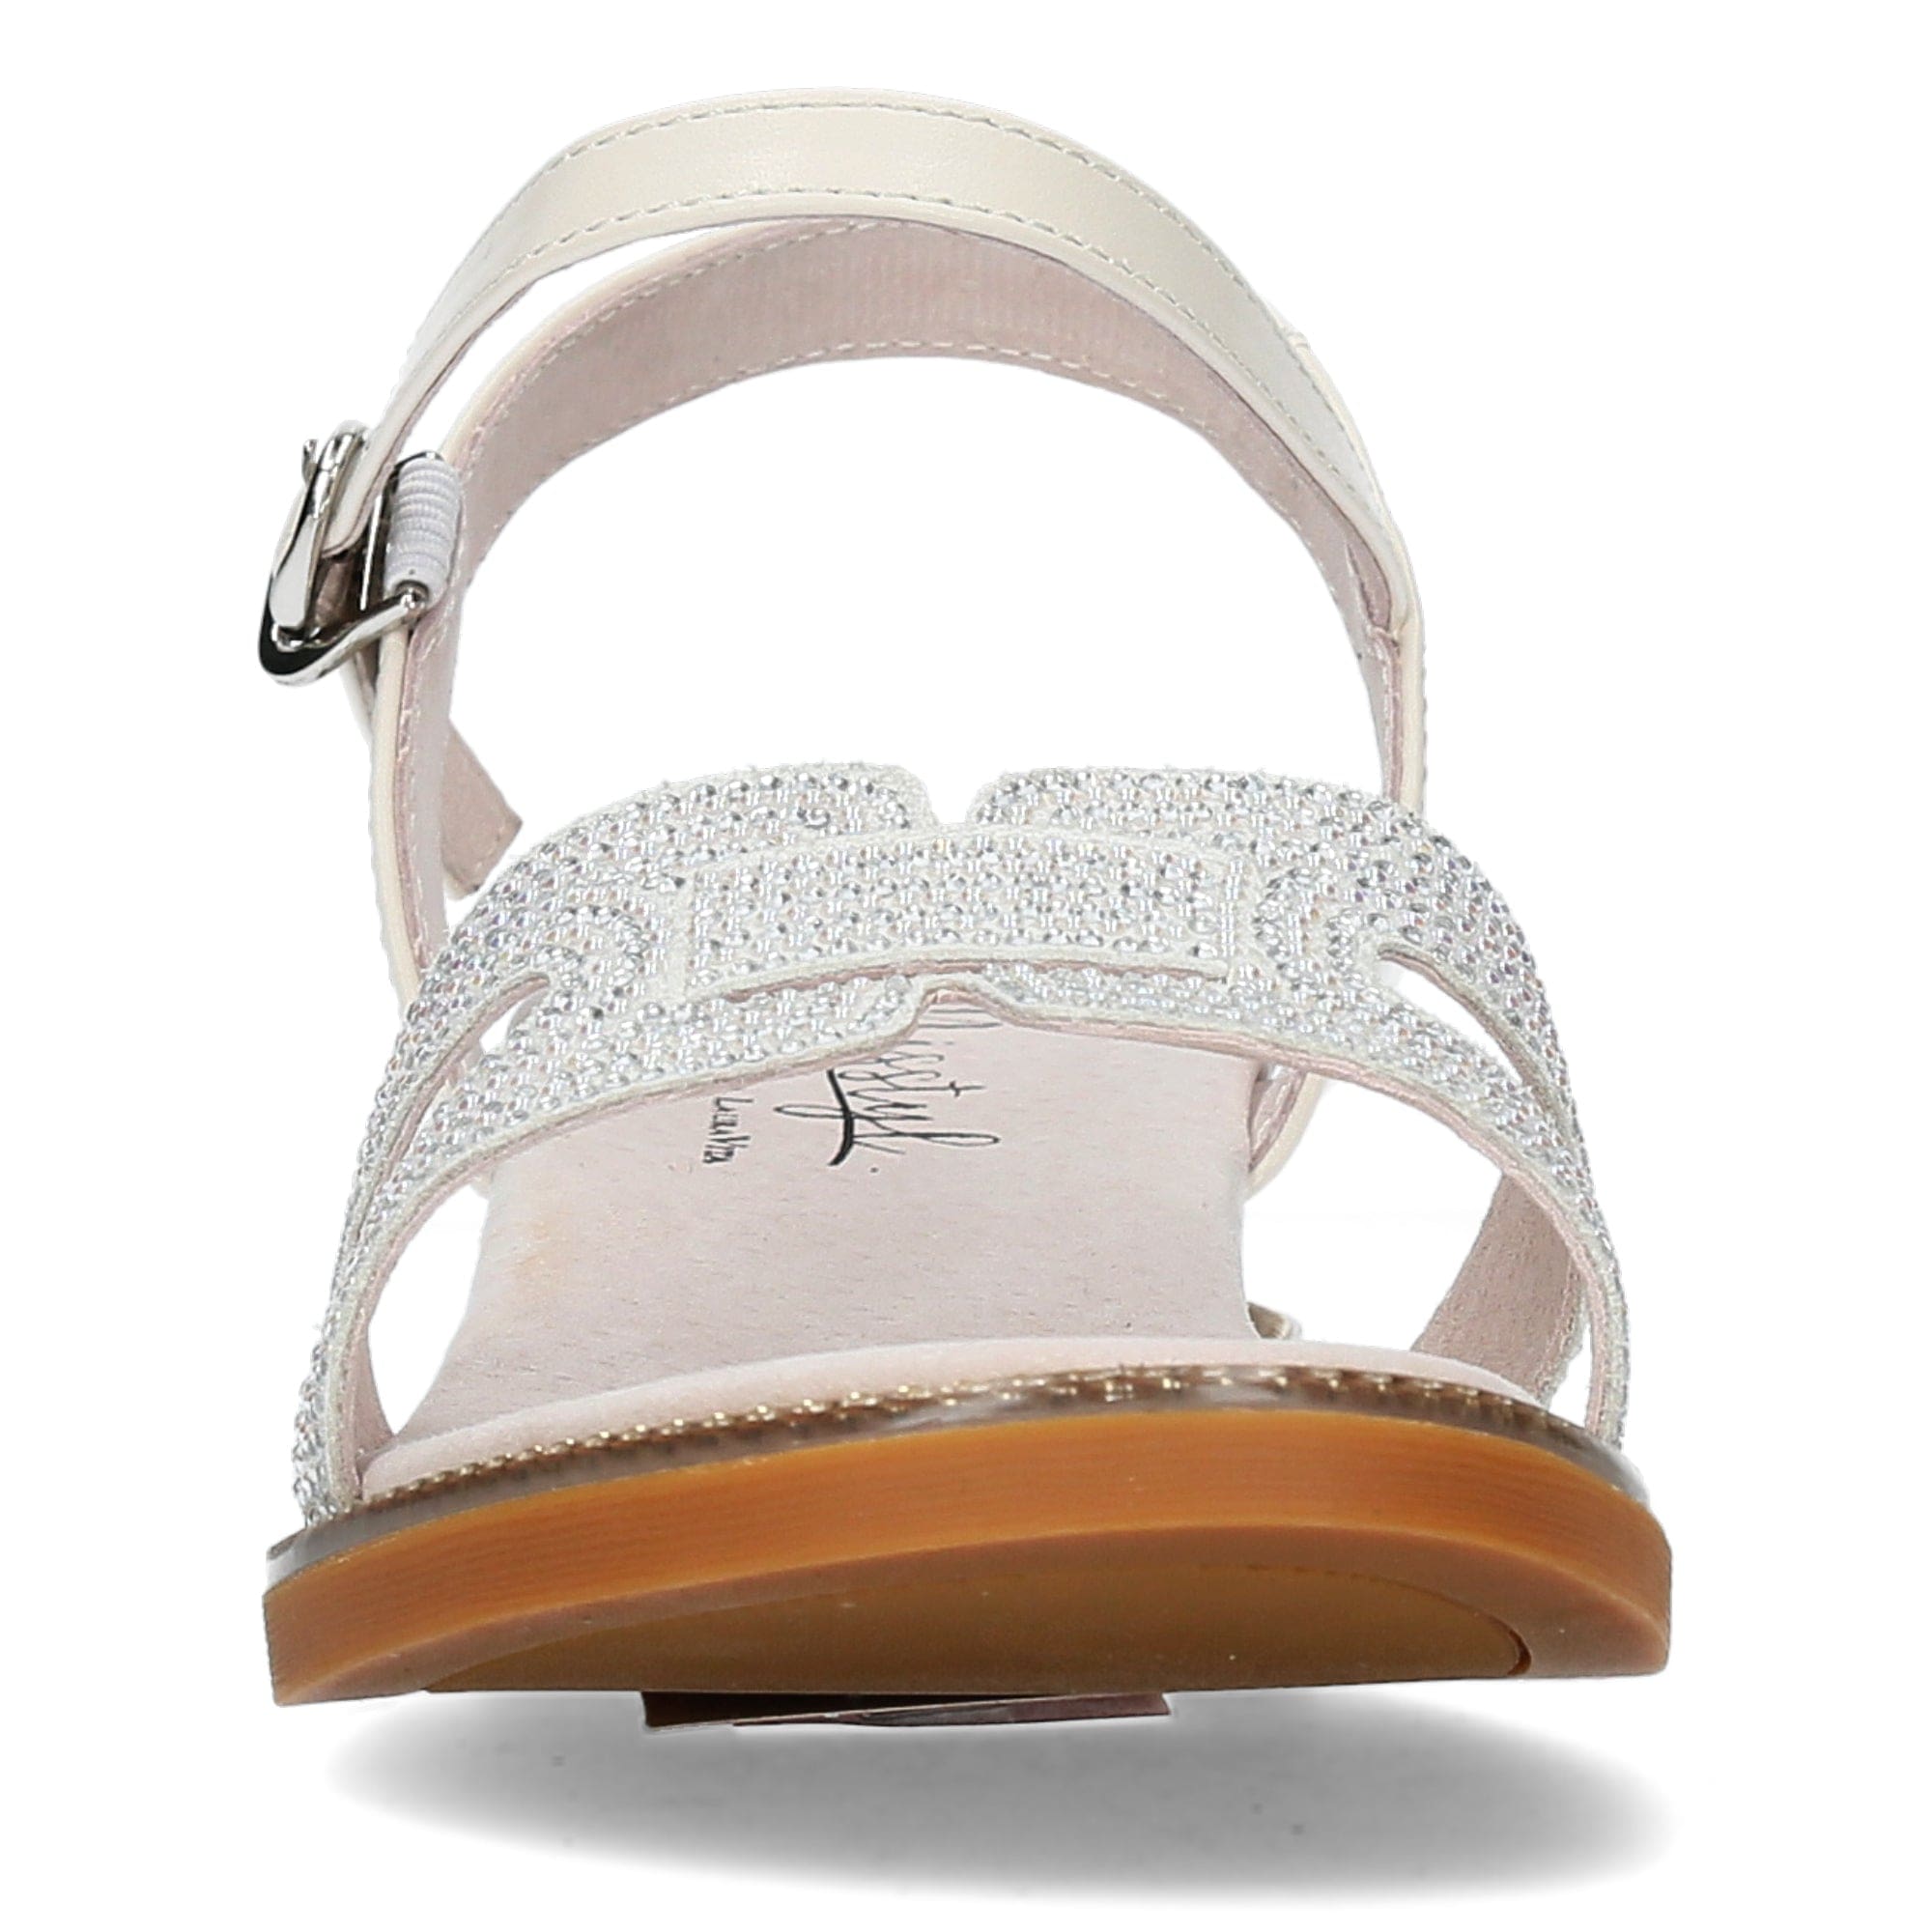 Schuh Misstyl MILAO 16 - Sandale